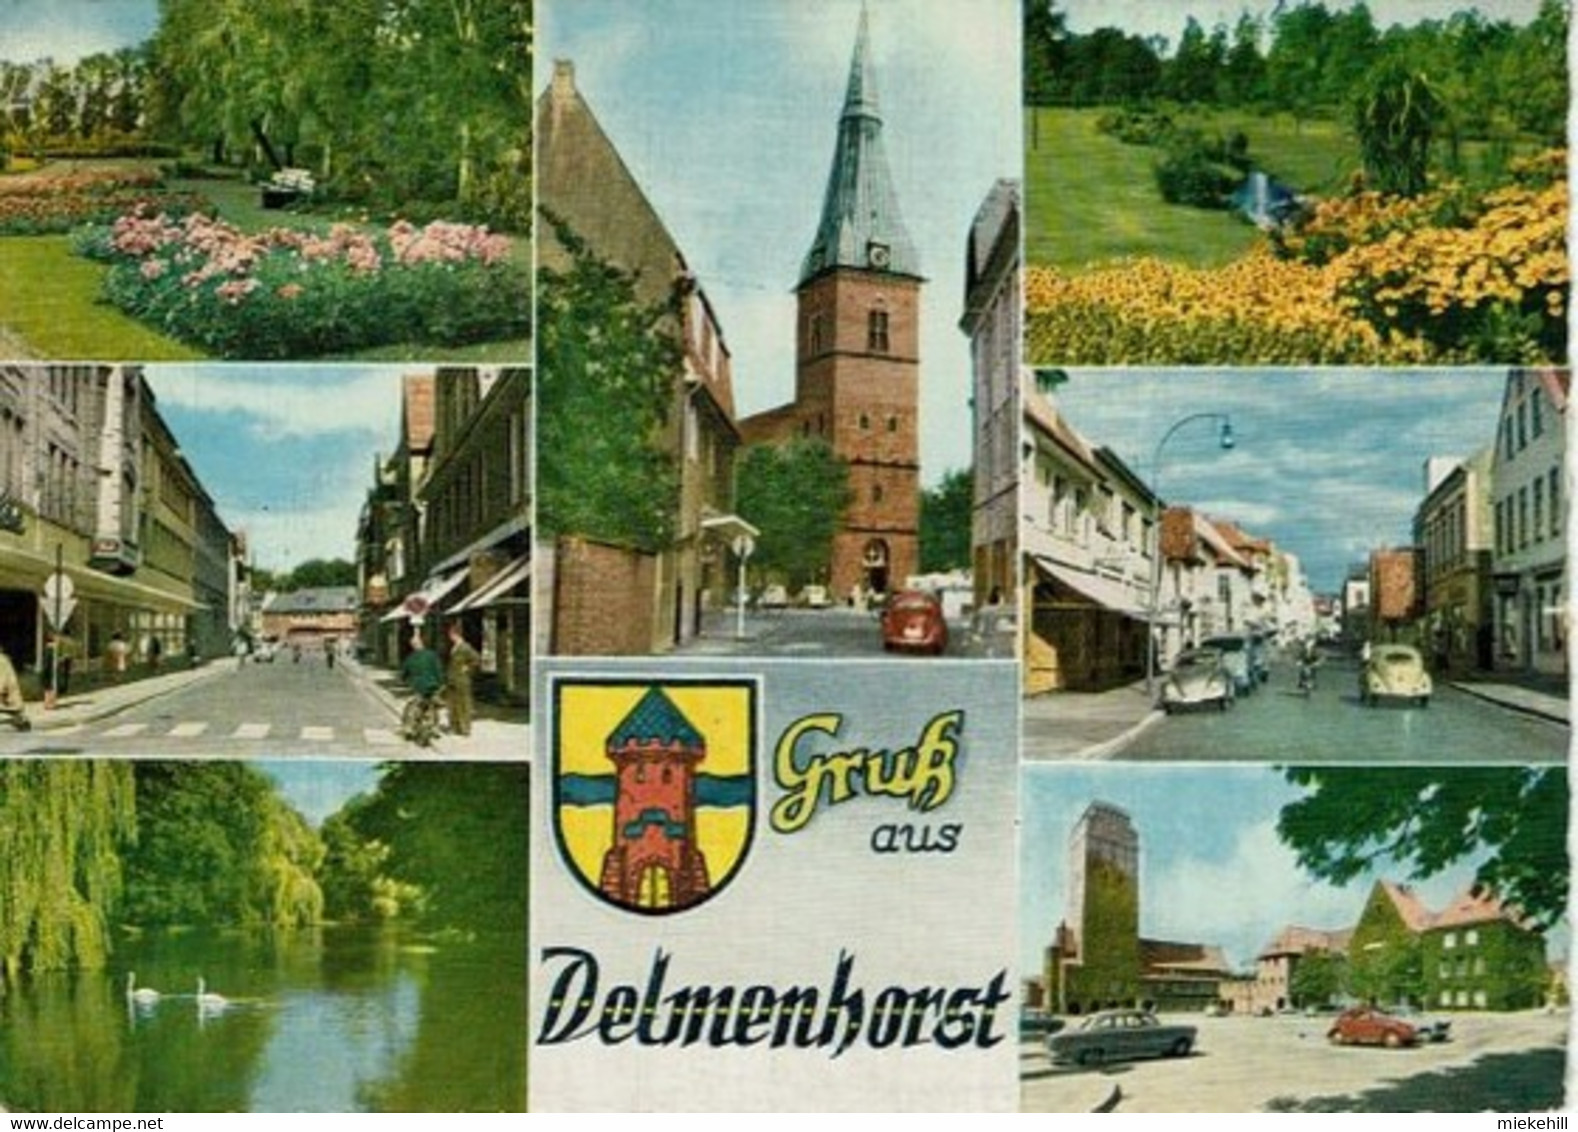 DELMENHORST-GRUSS AUS - Delmenhorst